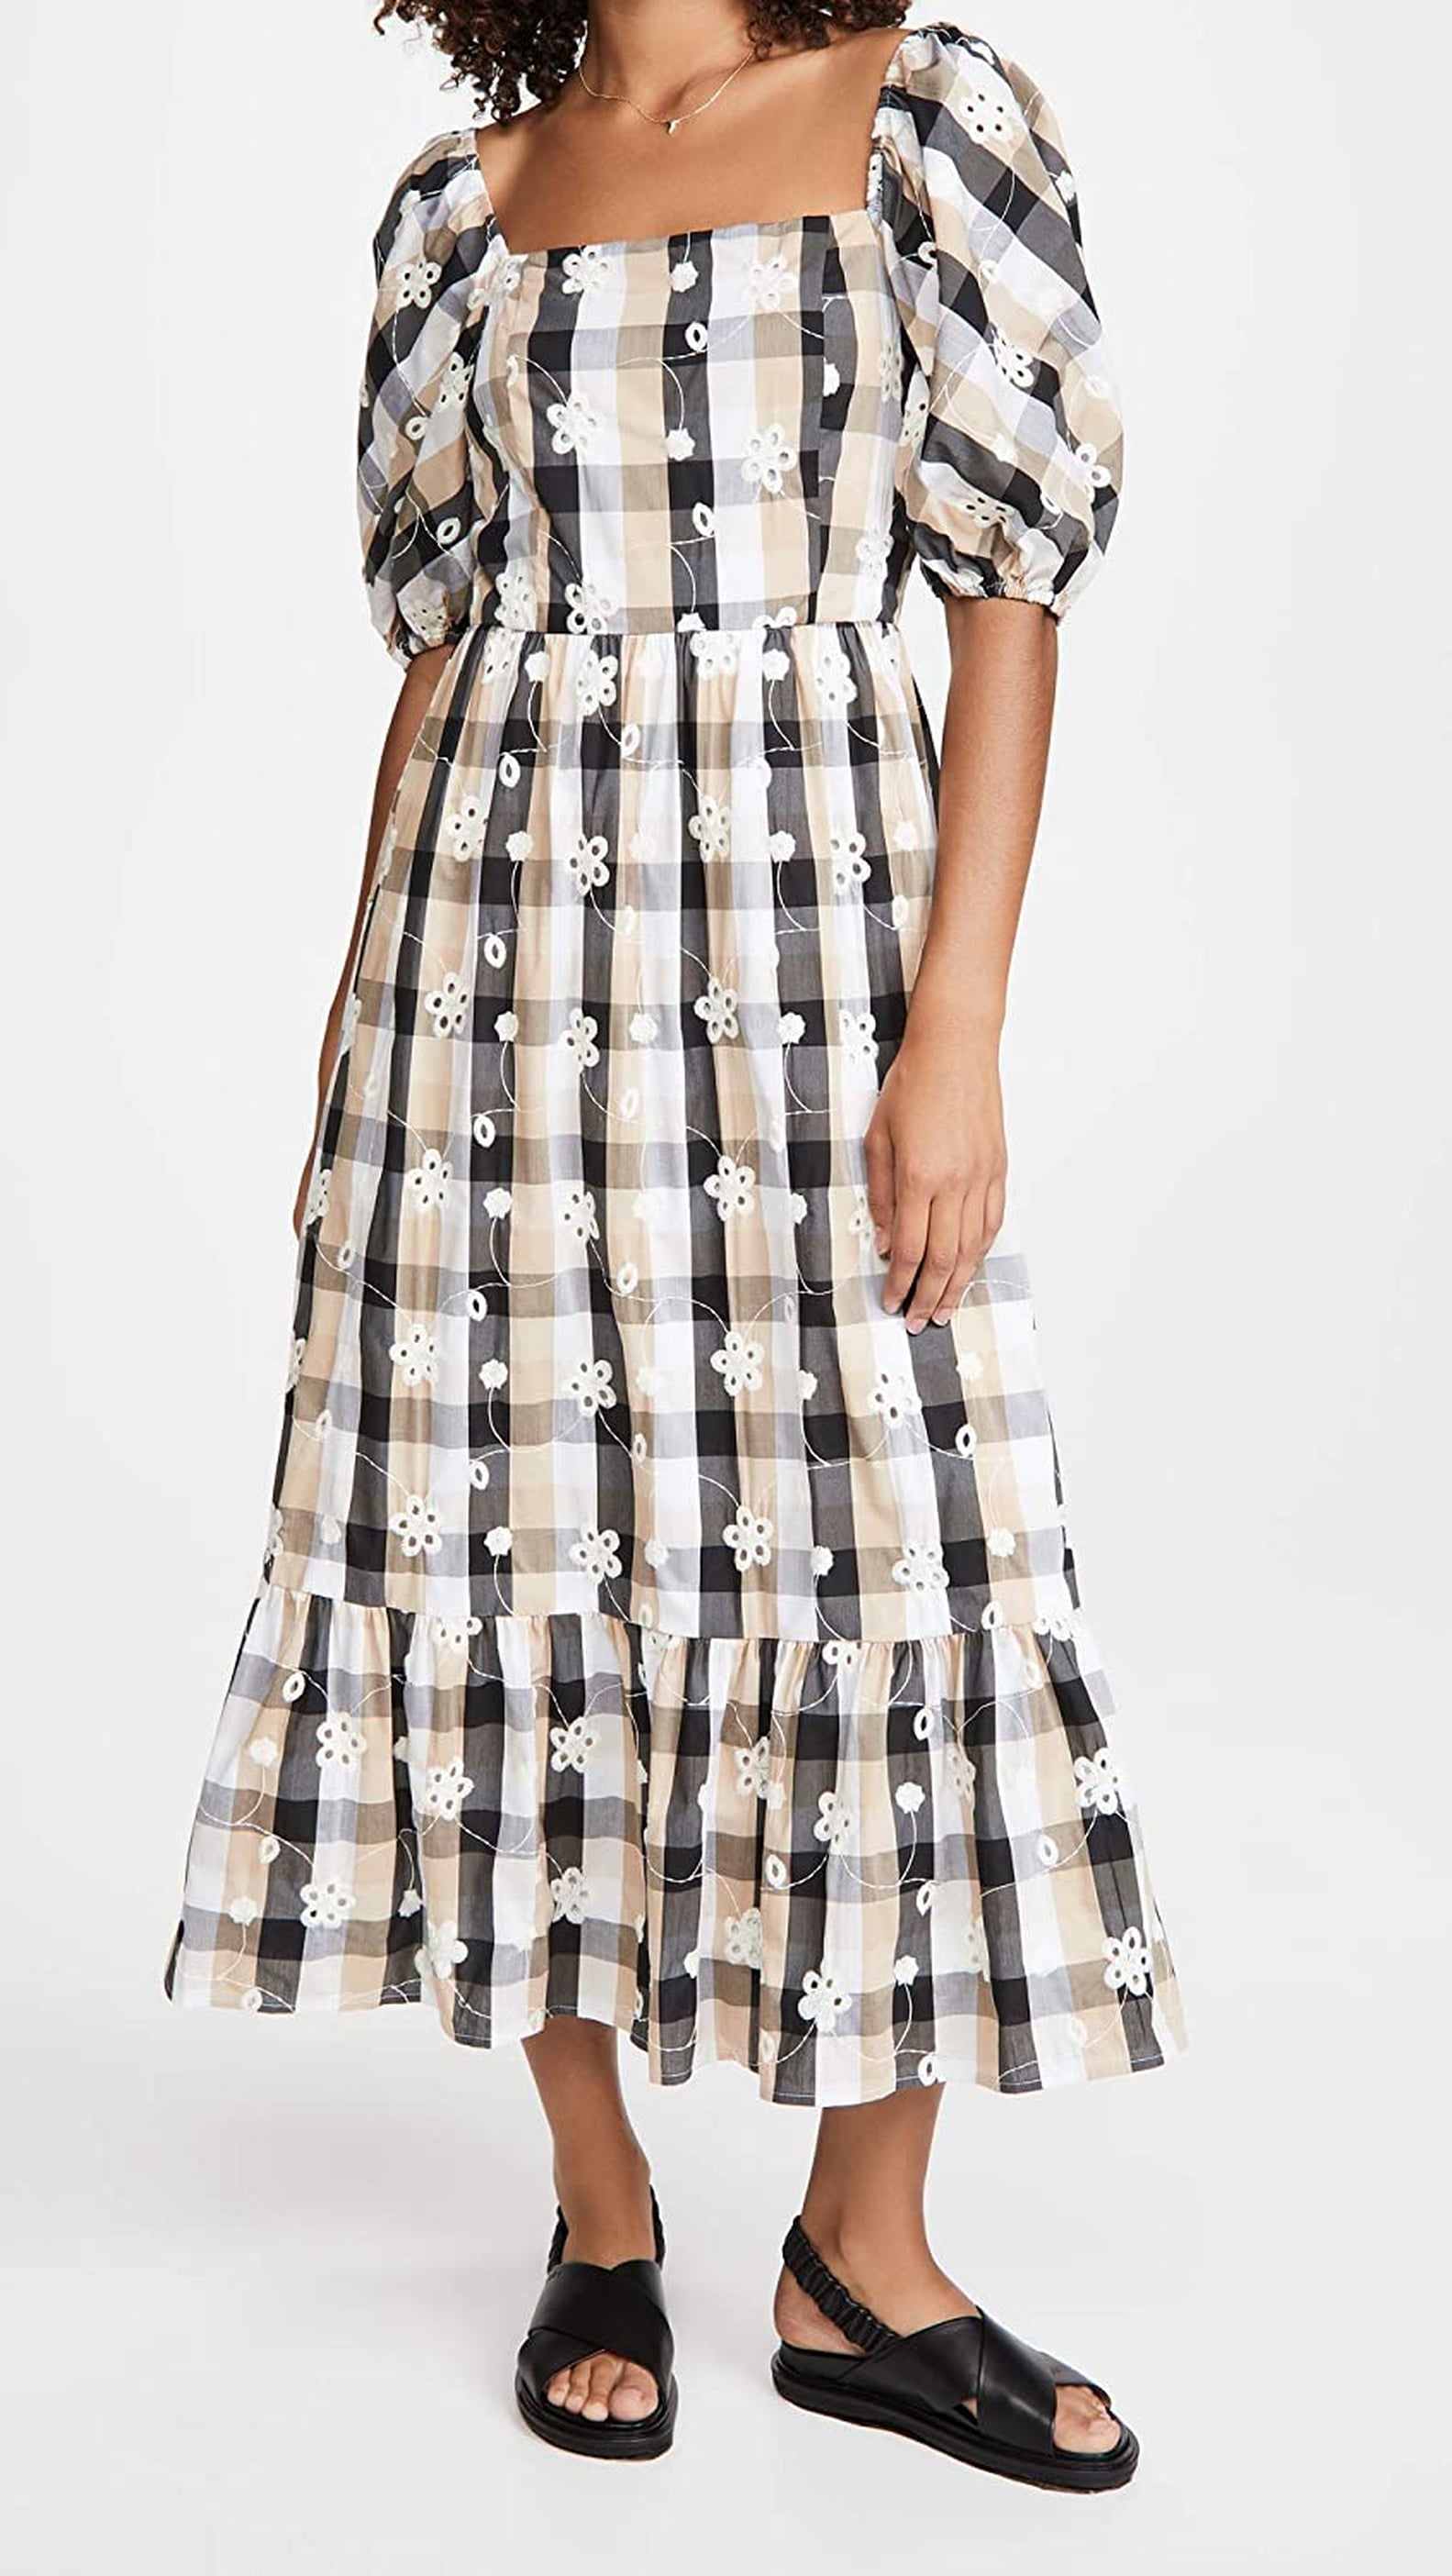 Affordable Amazon Dresses | POPSUGAR Fashion